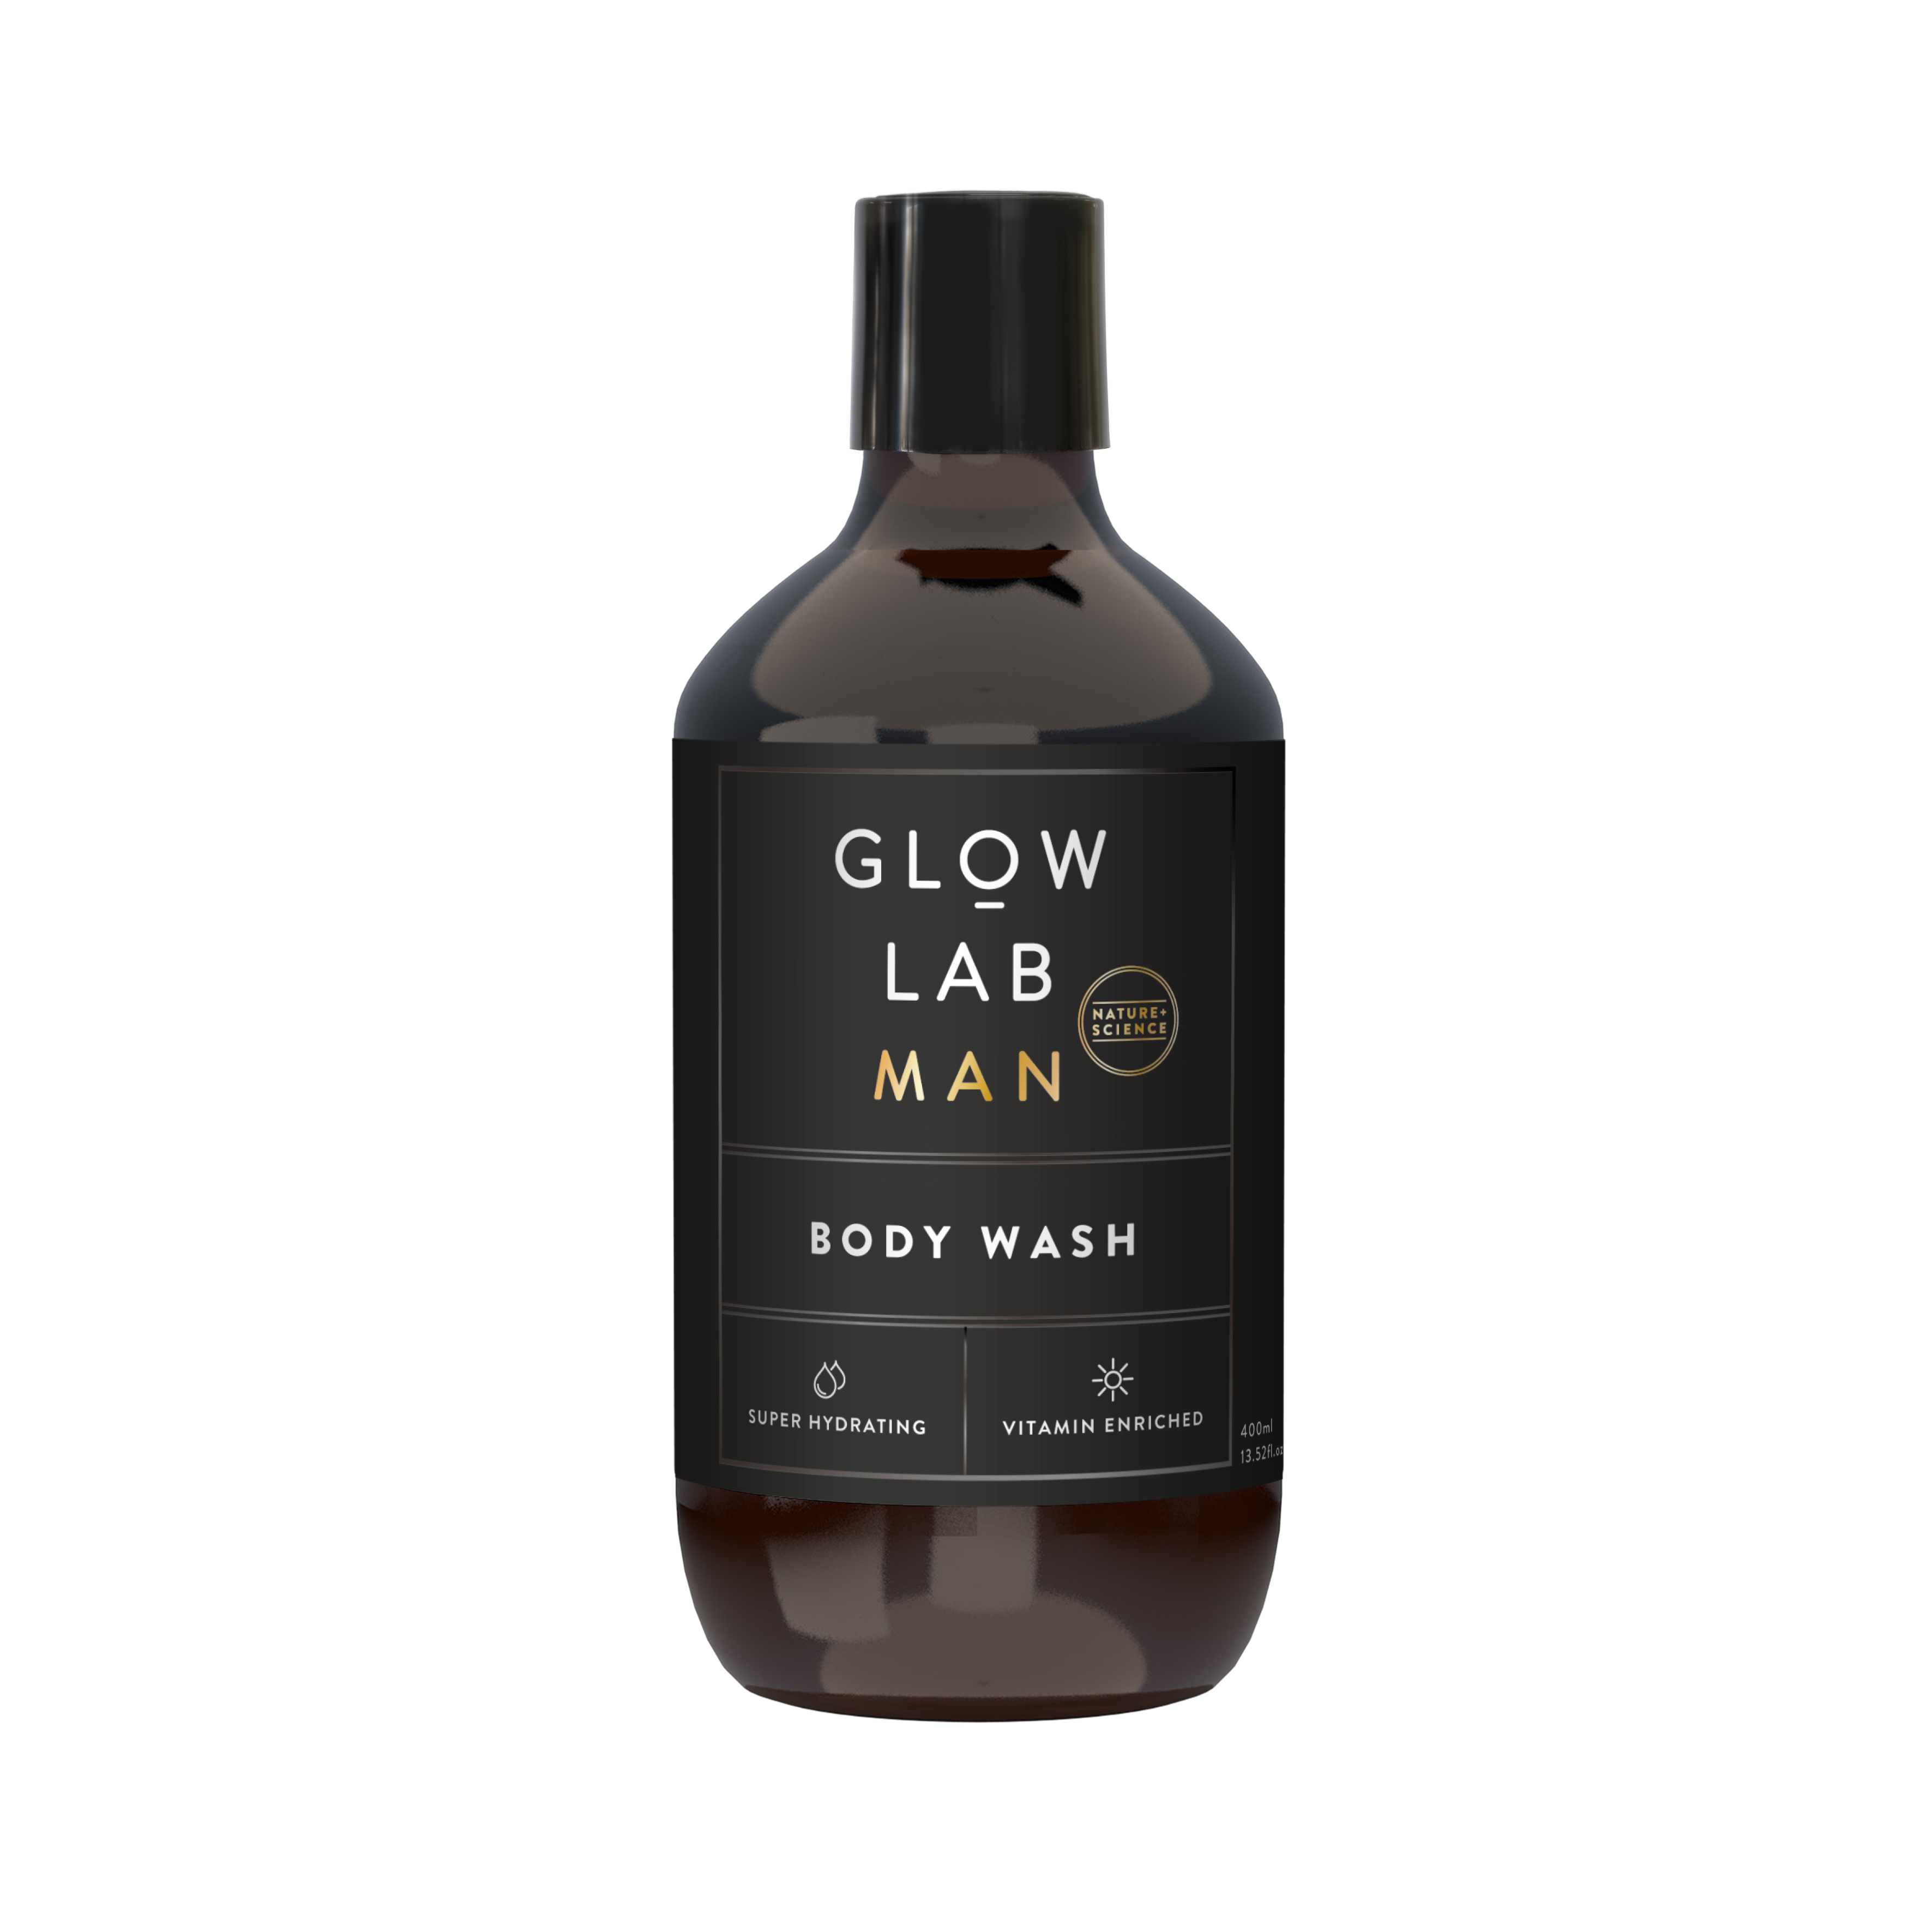 Glow Lab Man Body wash 